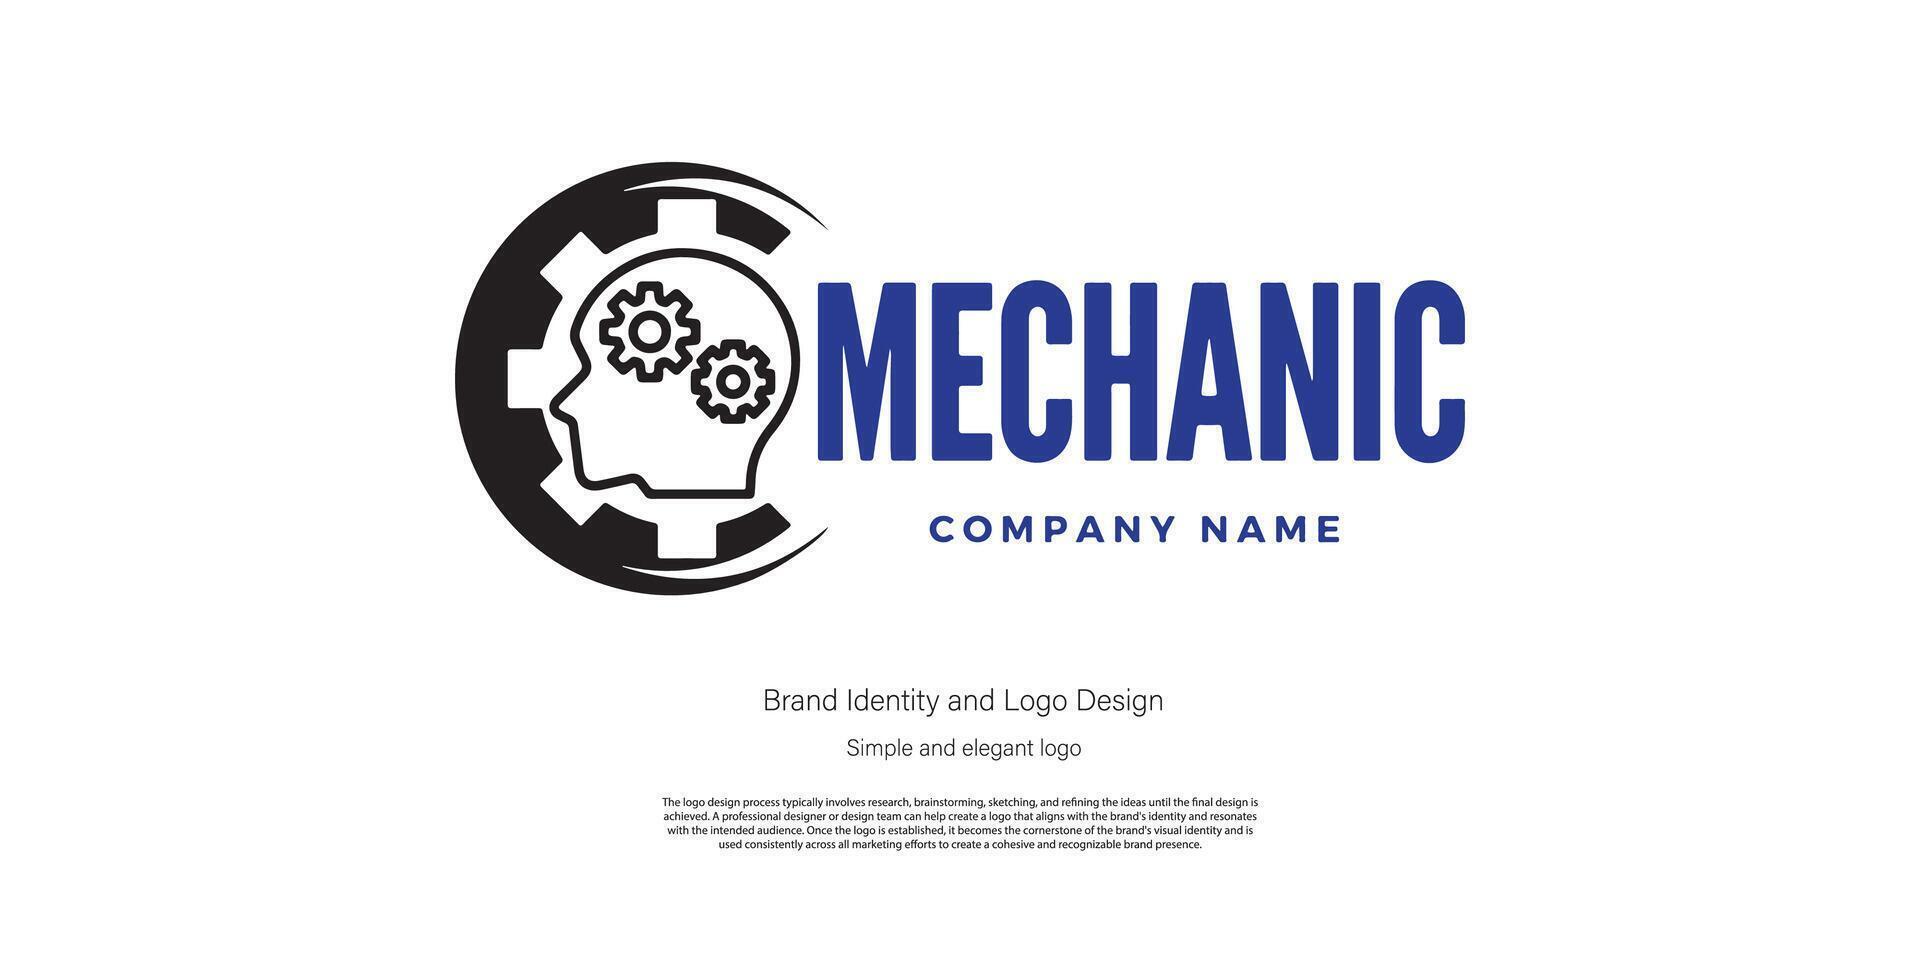 mecânico amd automotivo logotipo Projeto para logotipo desenhador ou rede desenvolvedor vetor